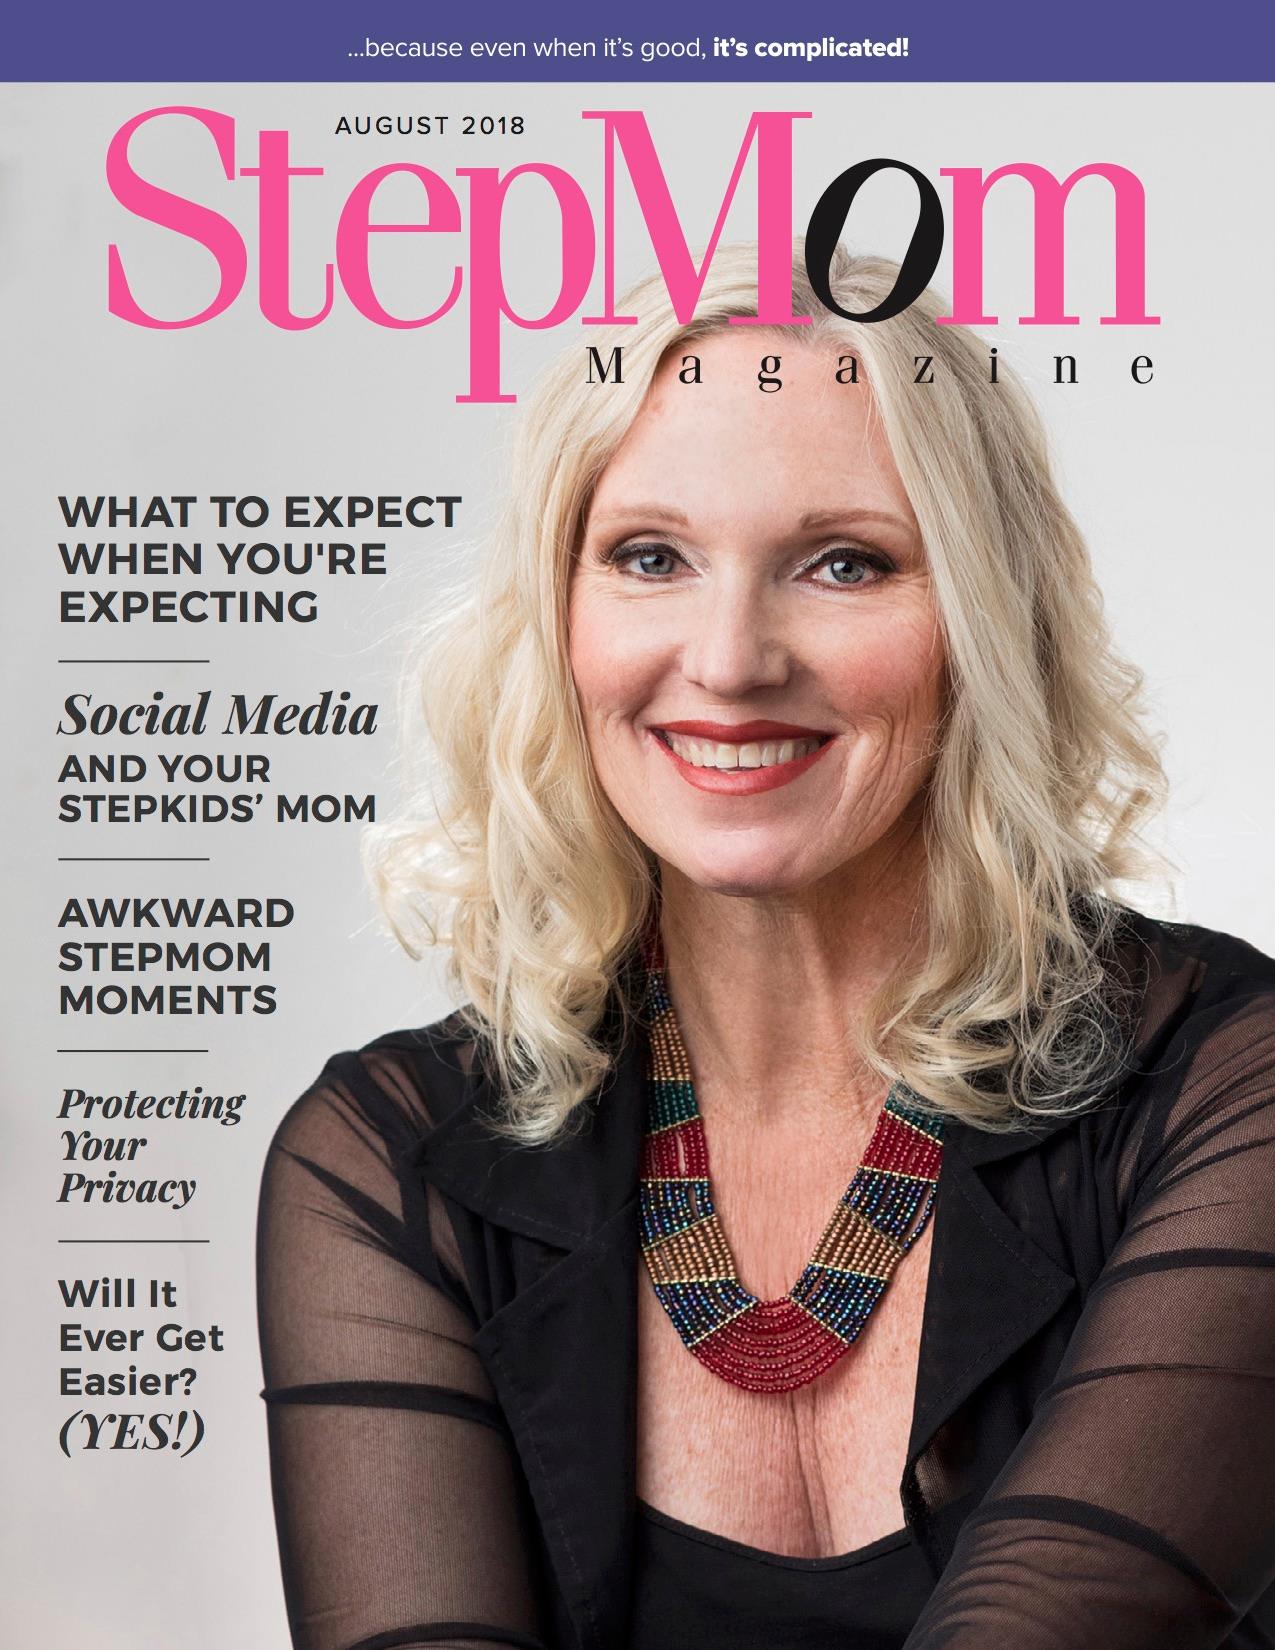 Shelley Stepmom Magazine Cover Aug 2018.jpg